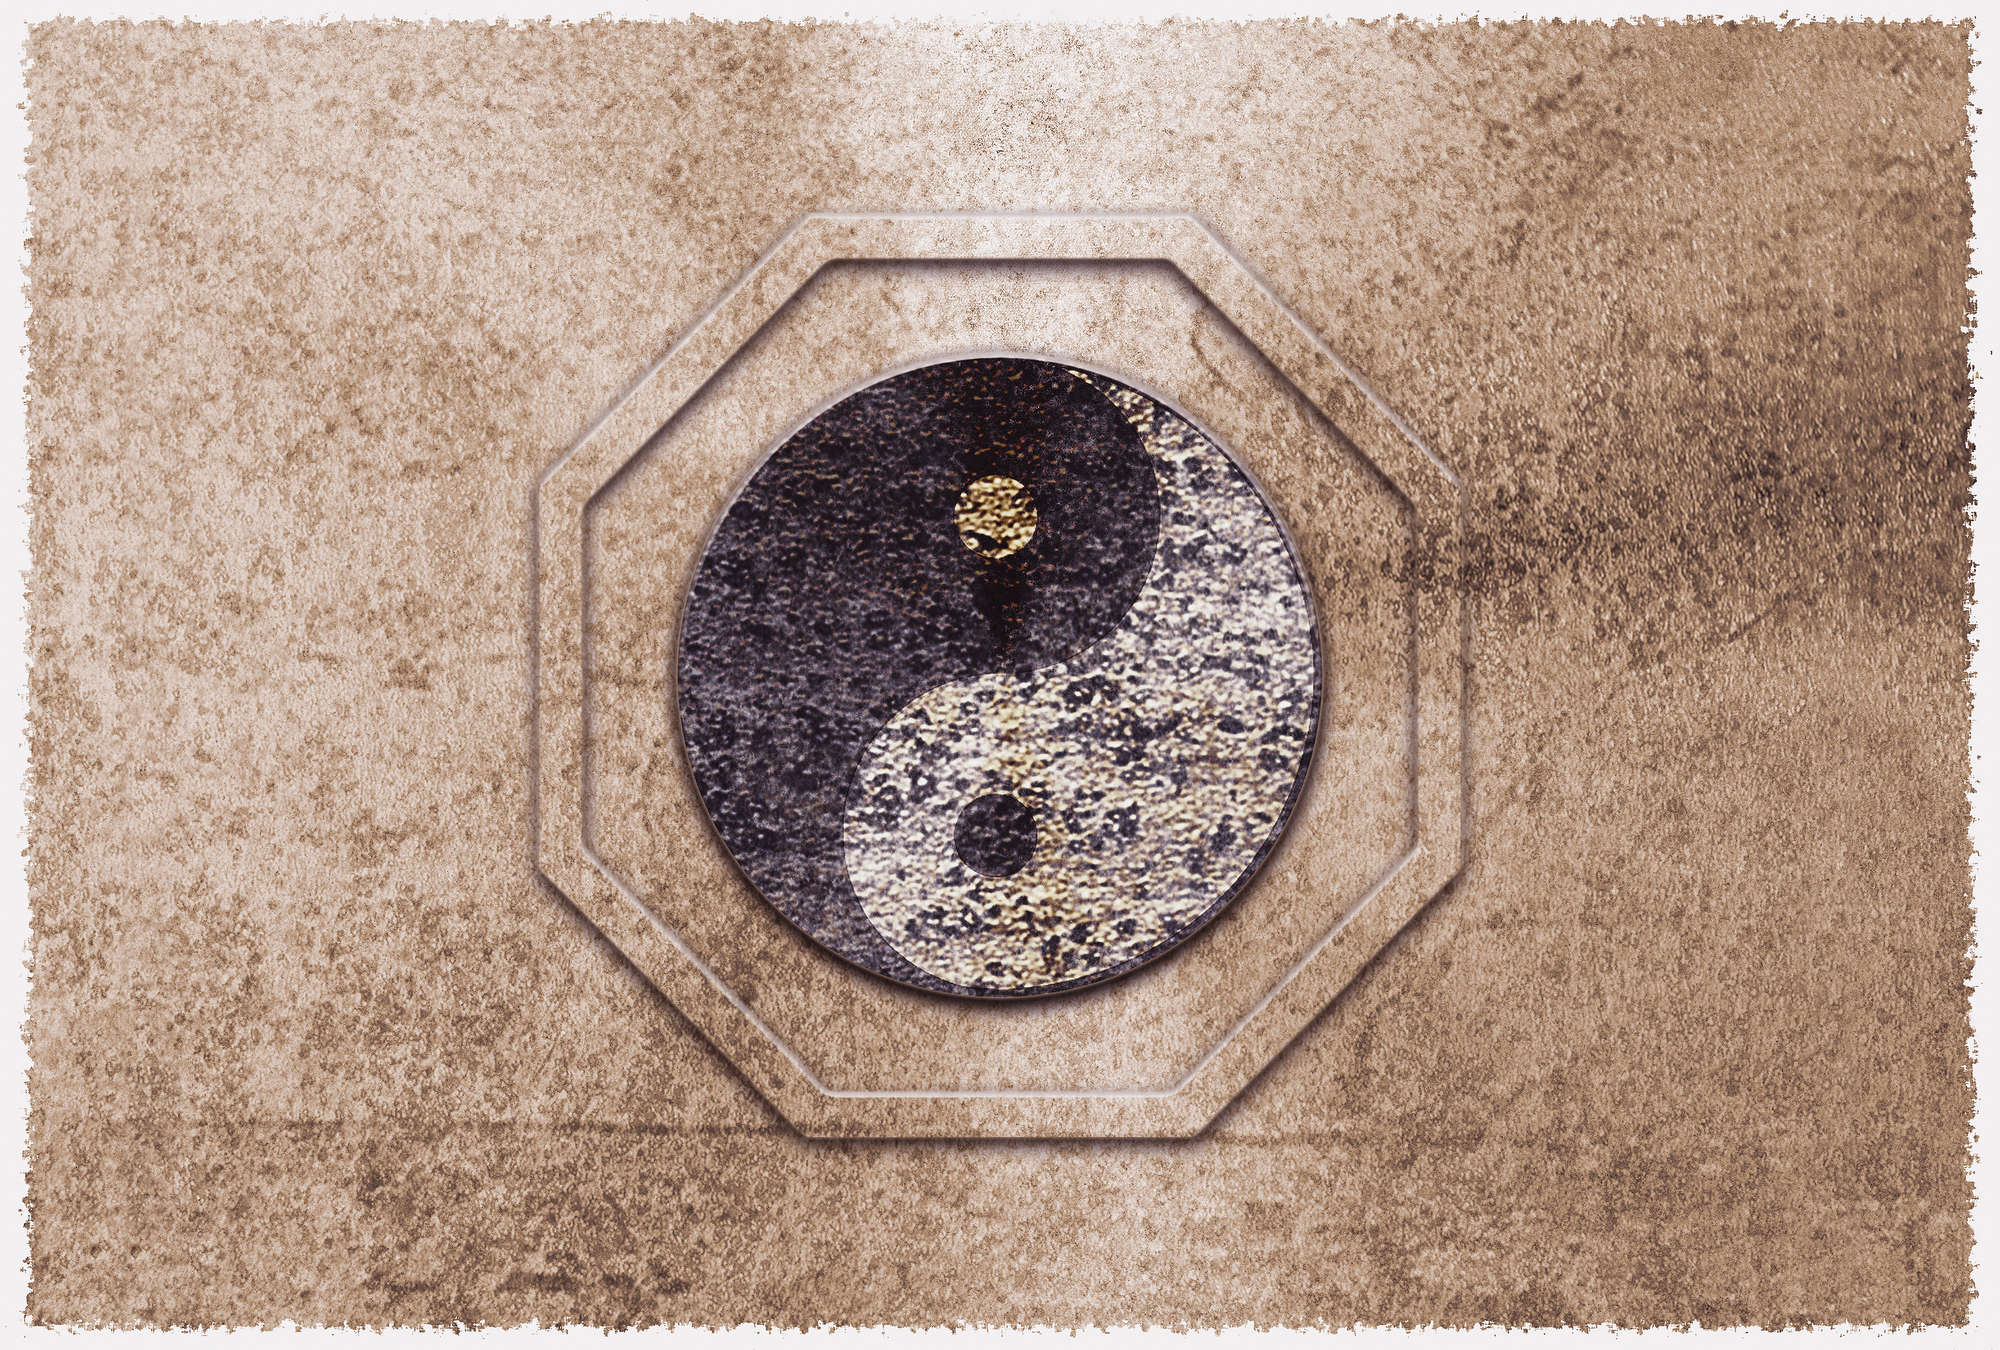             Mural Yin&Yang, símbolo de armonía asiática - Marrón, Negro, Blanco
        